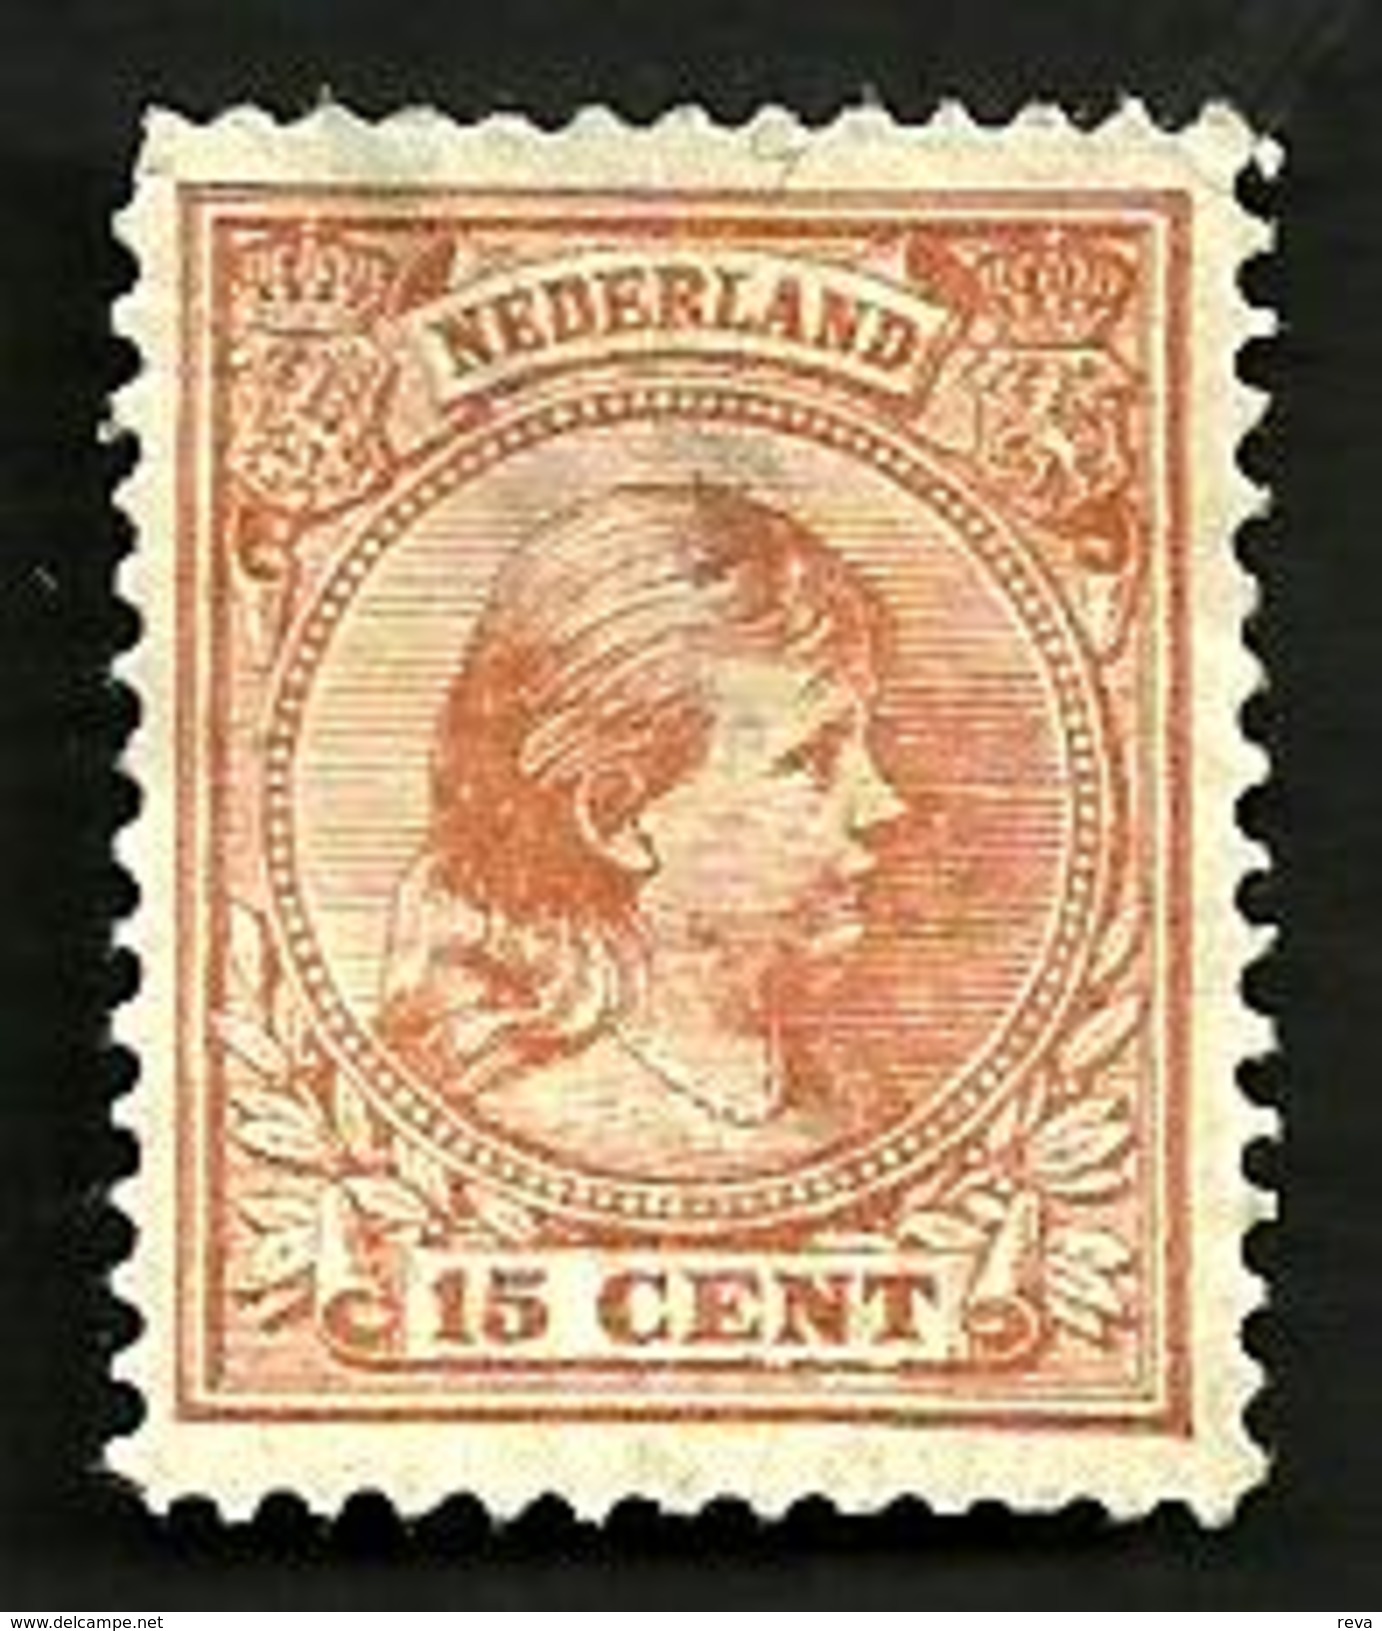 NETHERLANDS WIHELMINA (?) HEAD LIGHT BROWN 15 CENTS MINTH 1891 SG152a CVHIGH READ DESCRIPTION !! - Unused Stamps